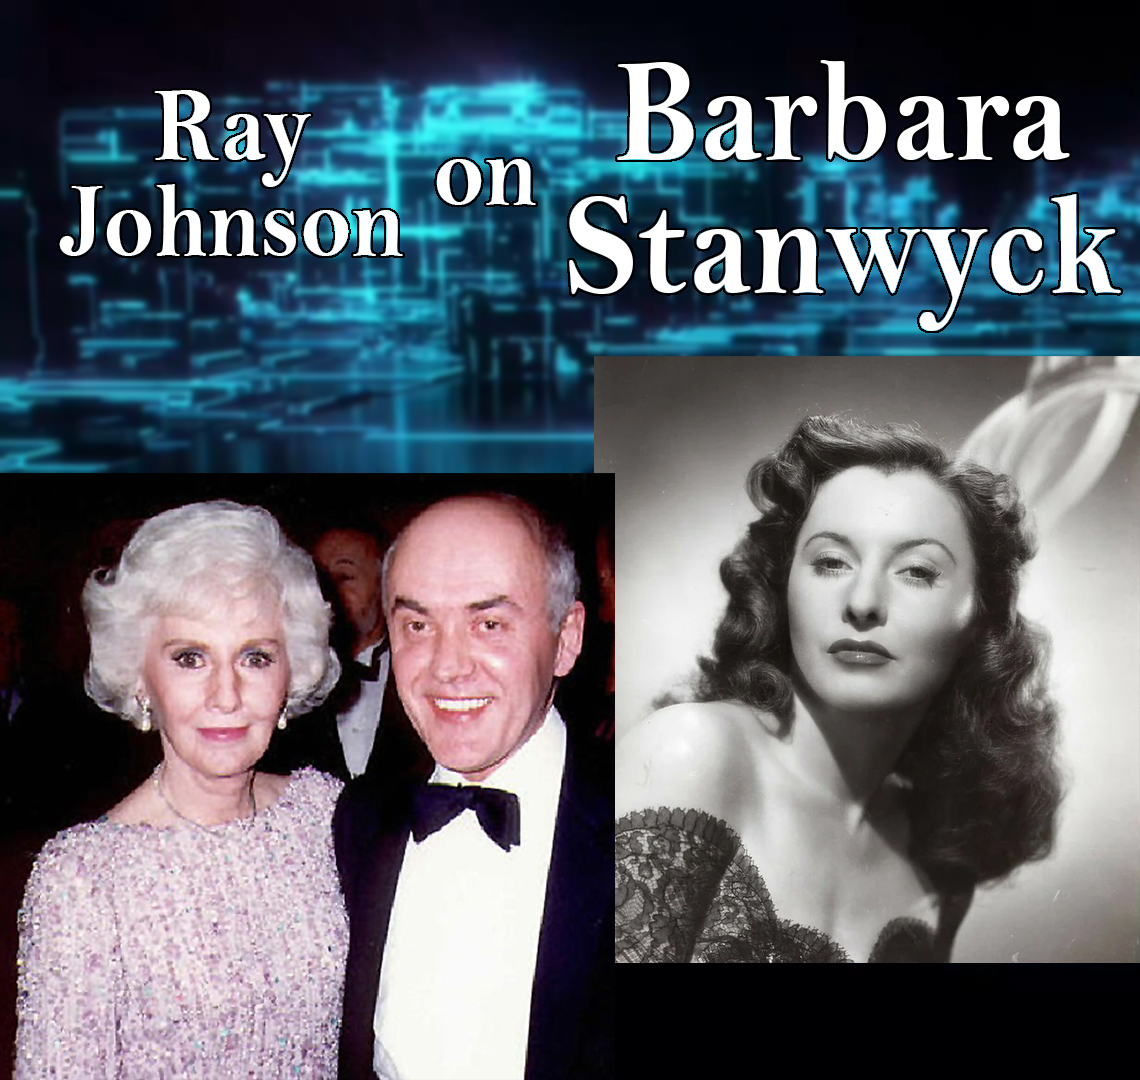 Barbara Stanwyck Superfan Ray Johnson Guests On Harvey Brownstone Interviews